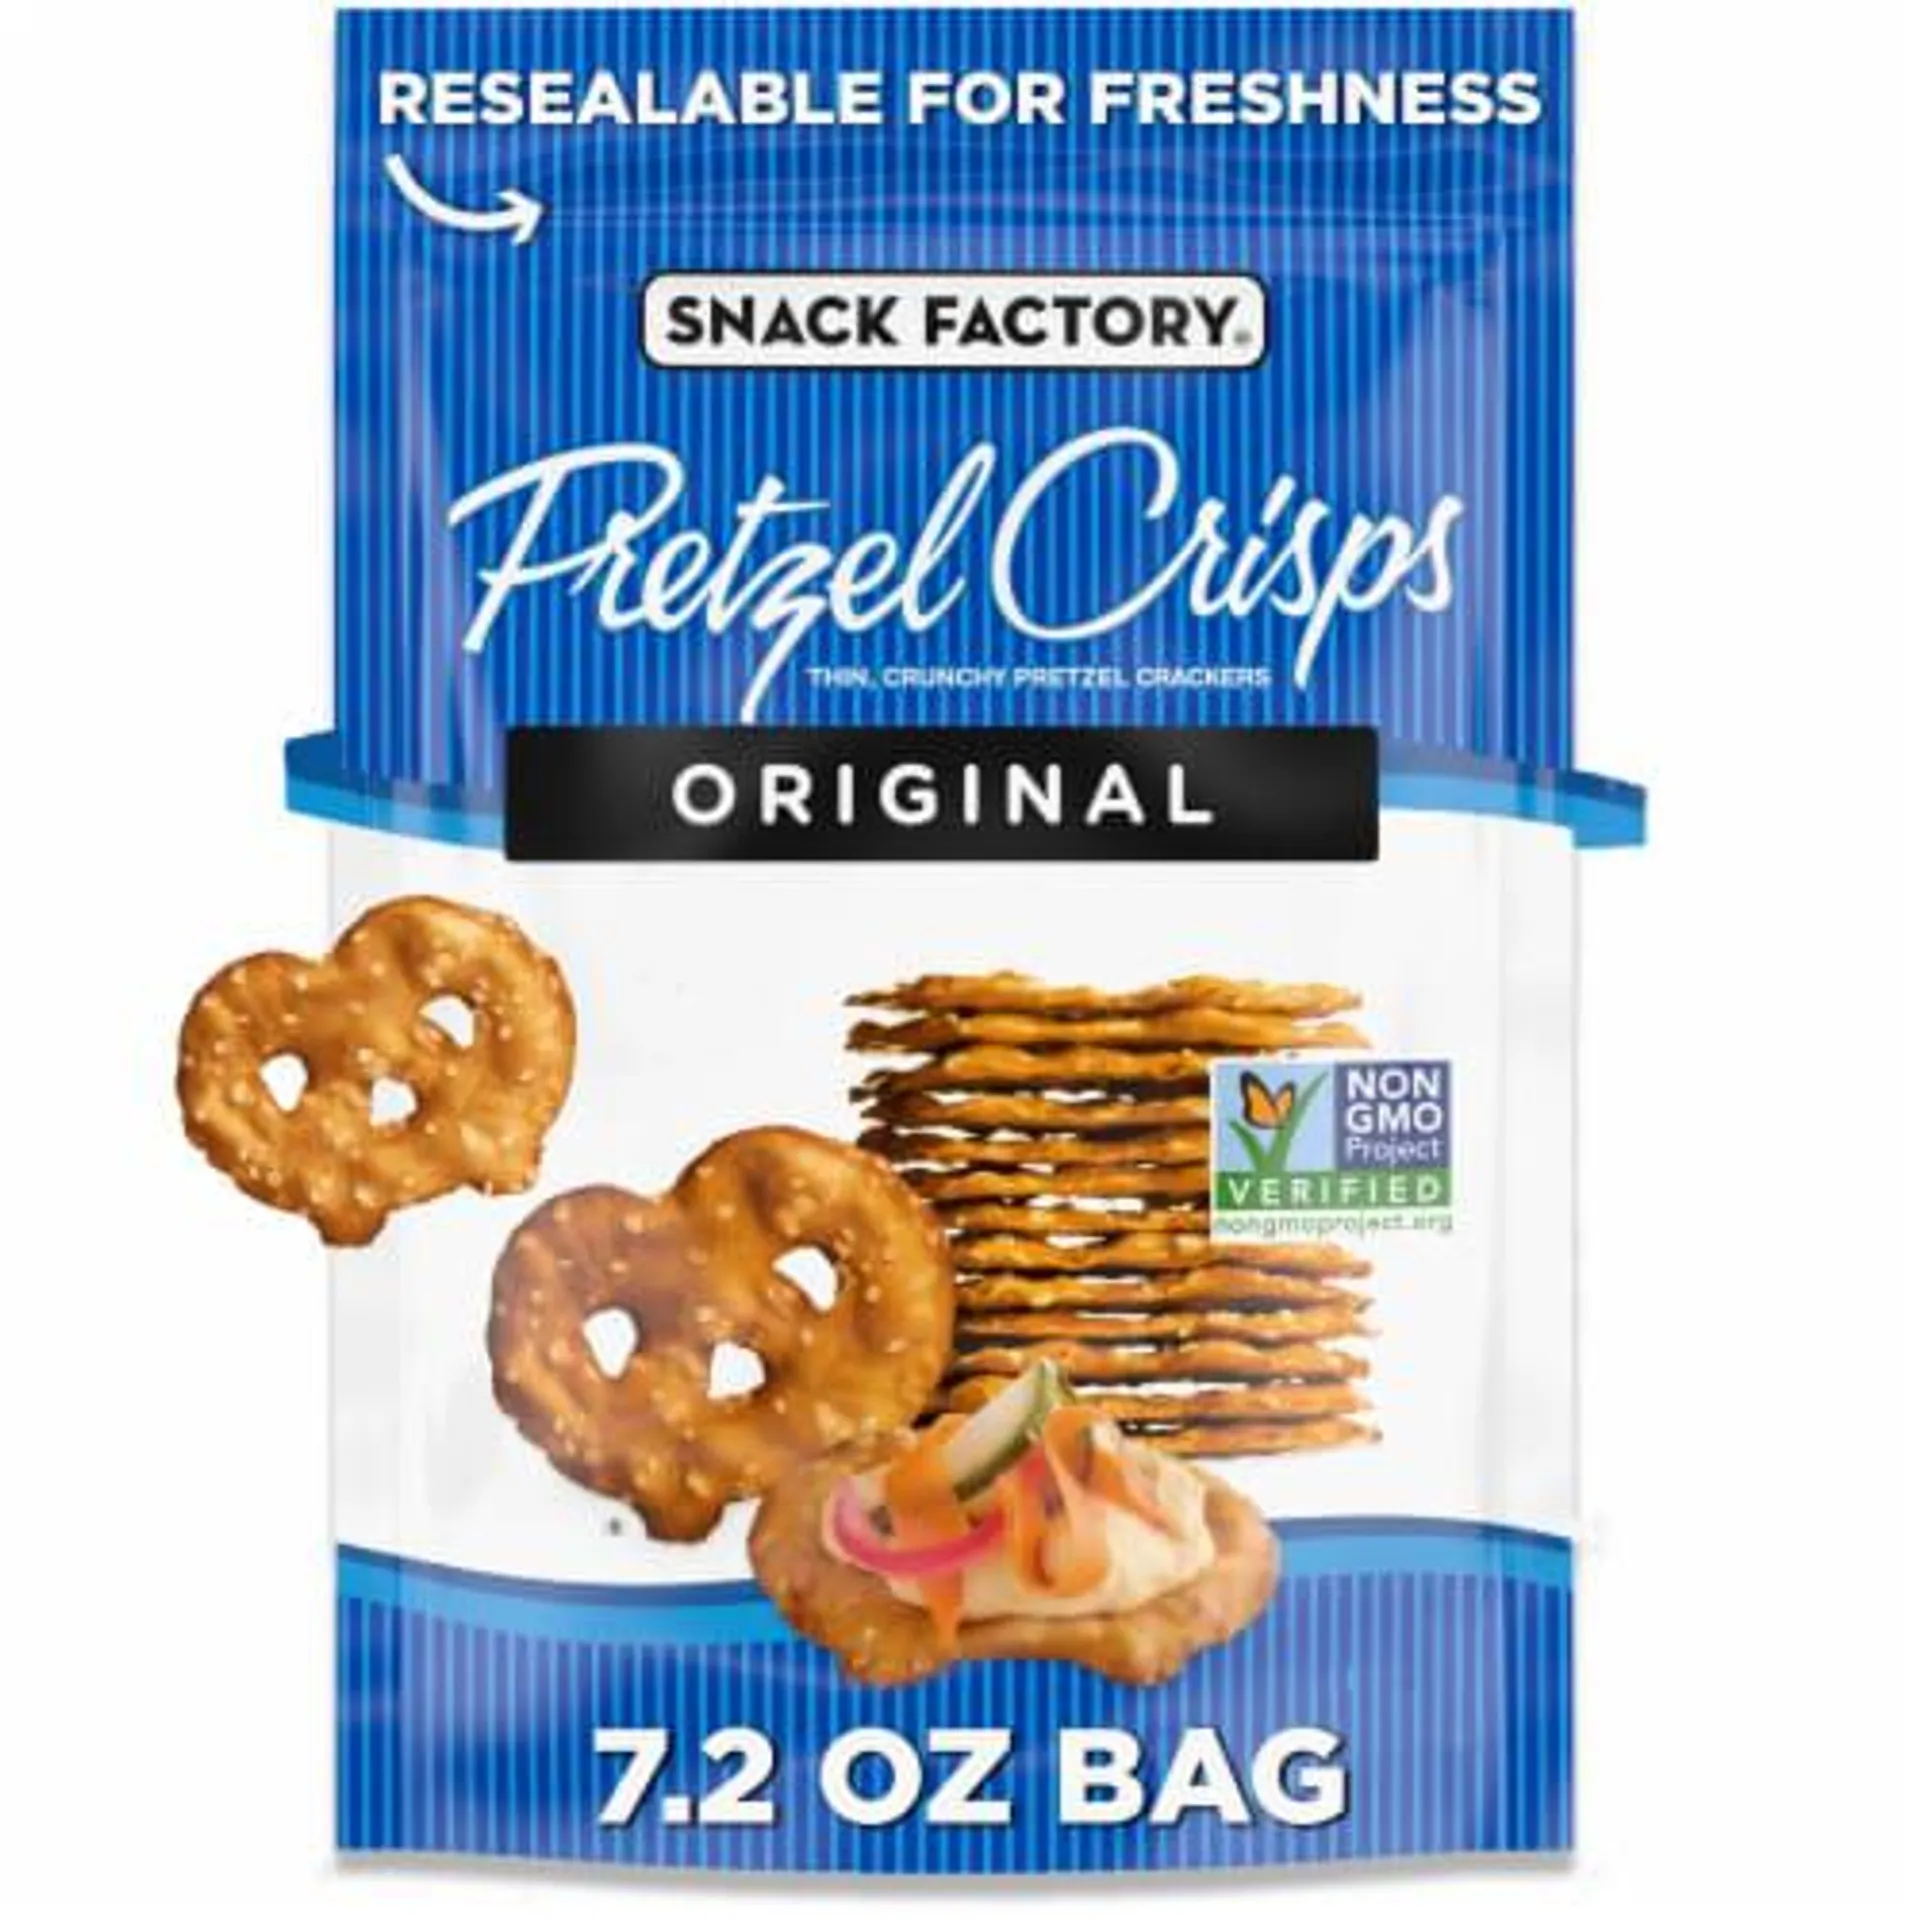 Snack Factory Pretzel Crisps Original Deli Style Crackers